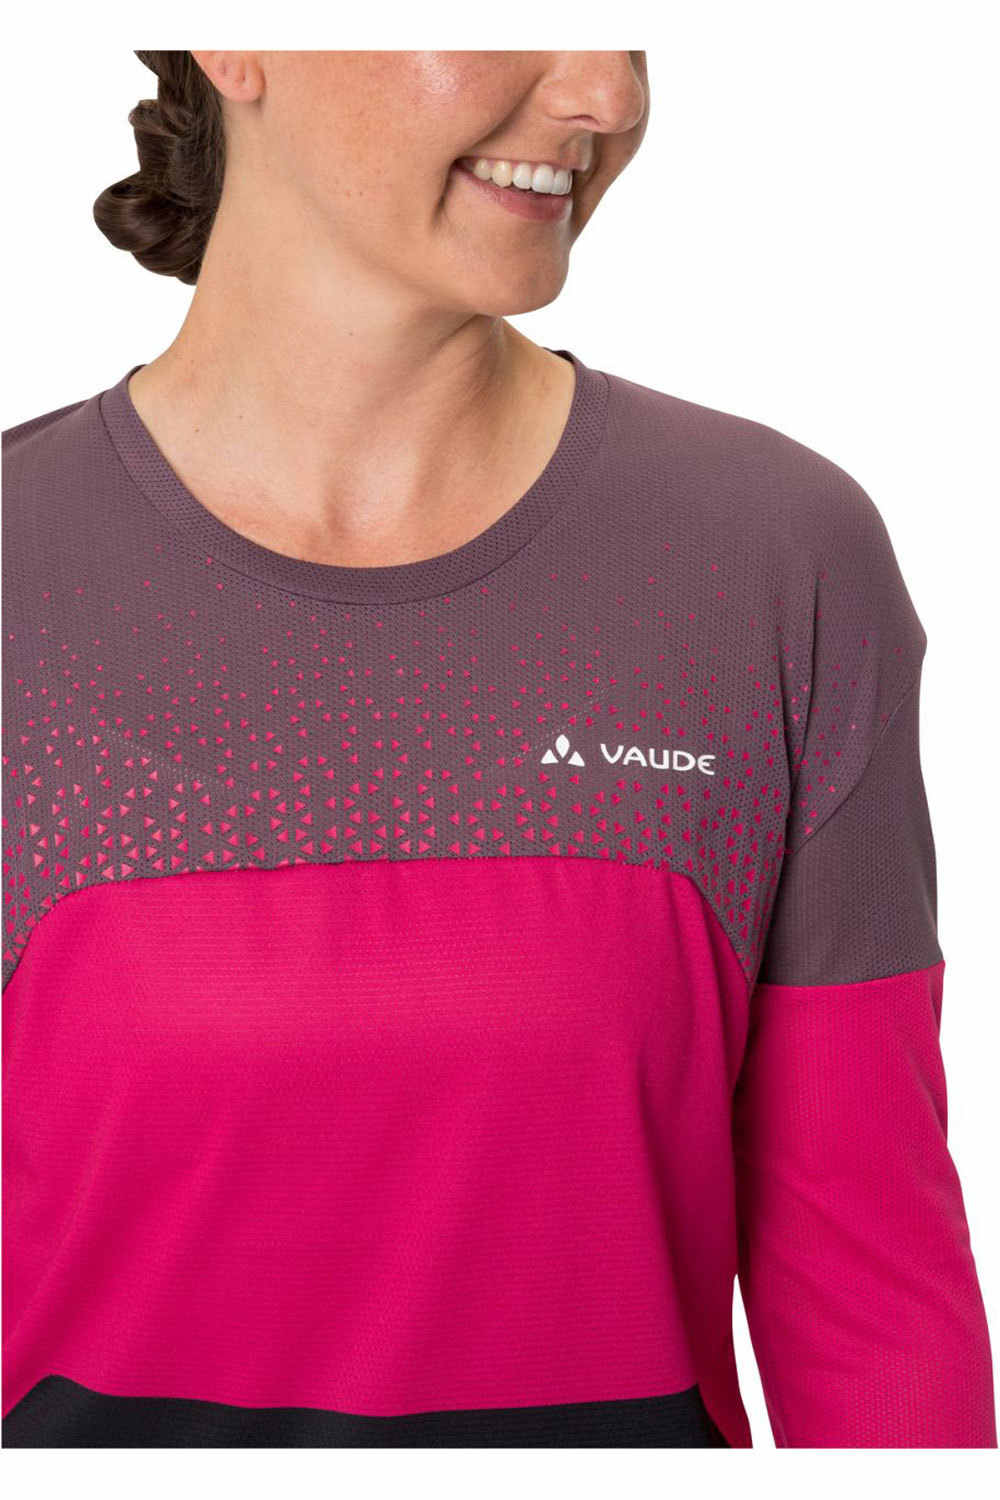 Vaude maillot manga larga mujer Women's Moab LS T-Shirt V vista detalle